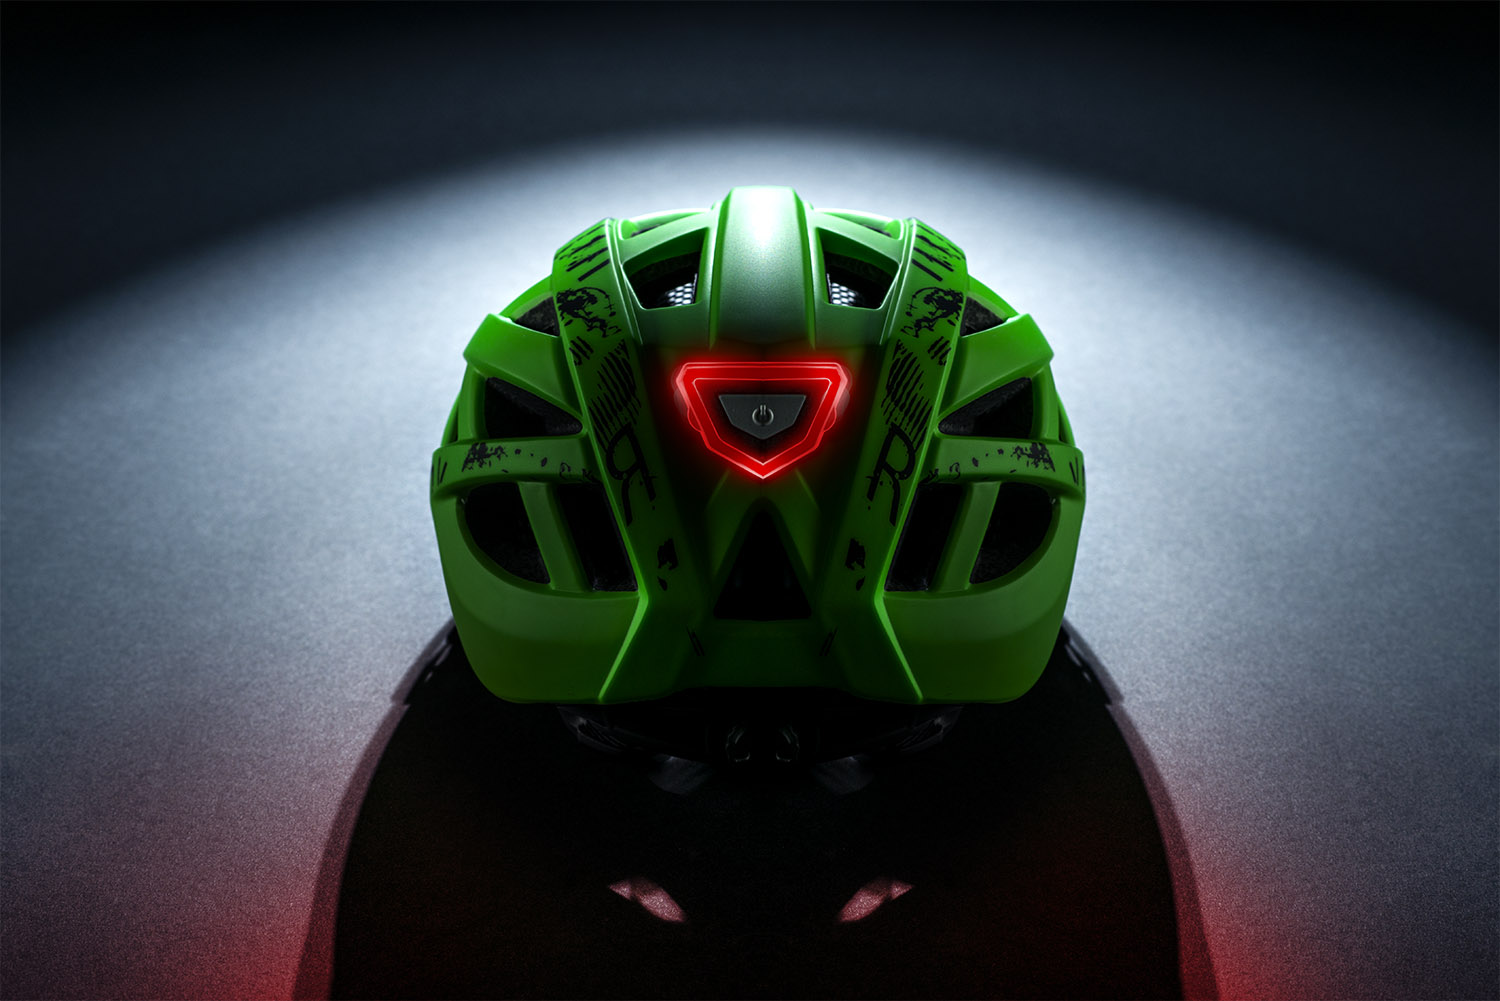 Náhradní světlo cyklistické helmy ATH18 a ATH20 na baterie.